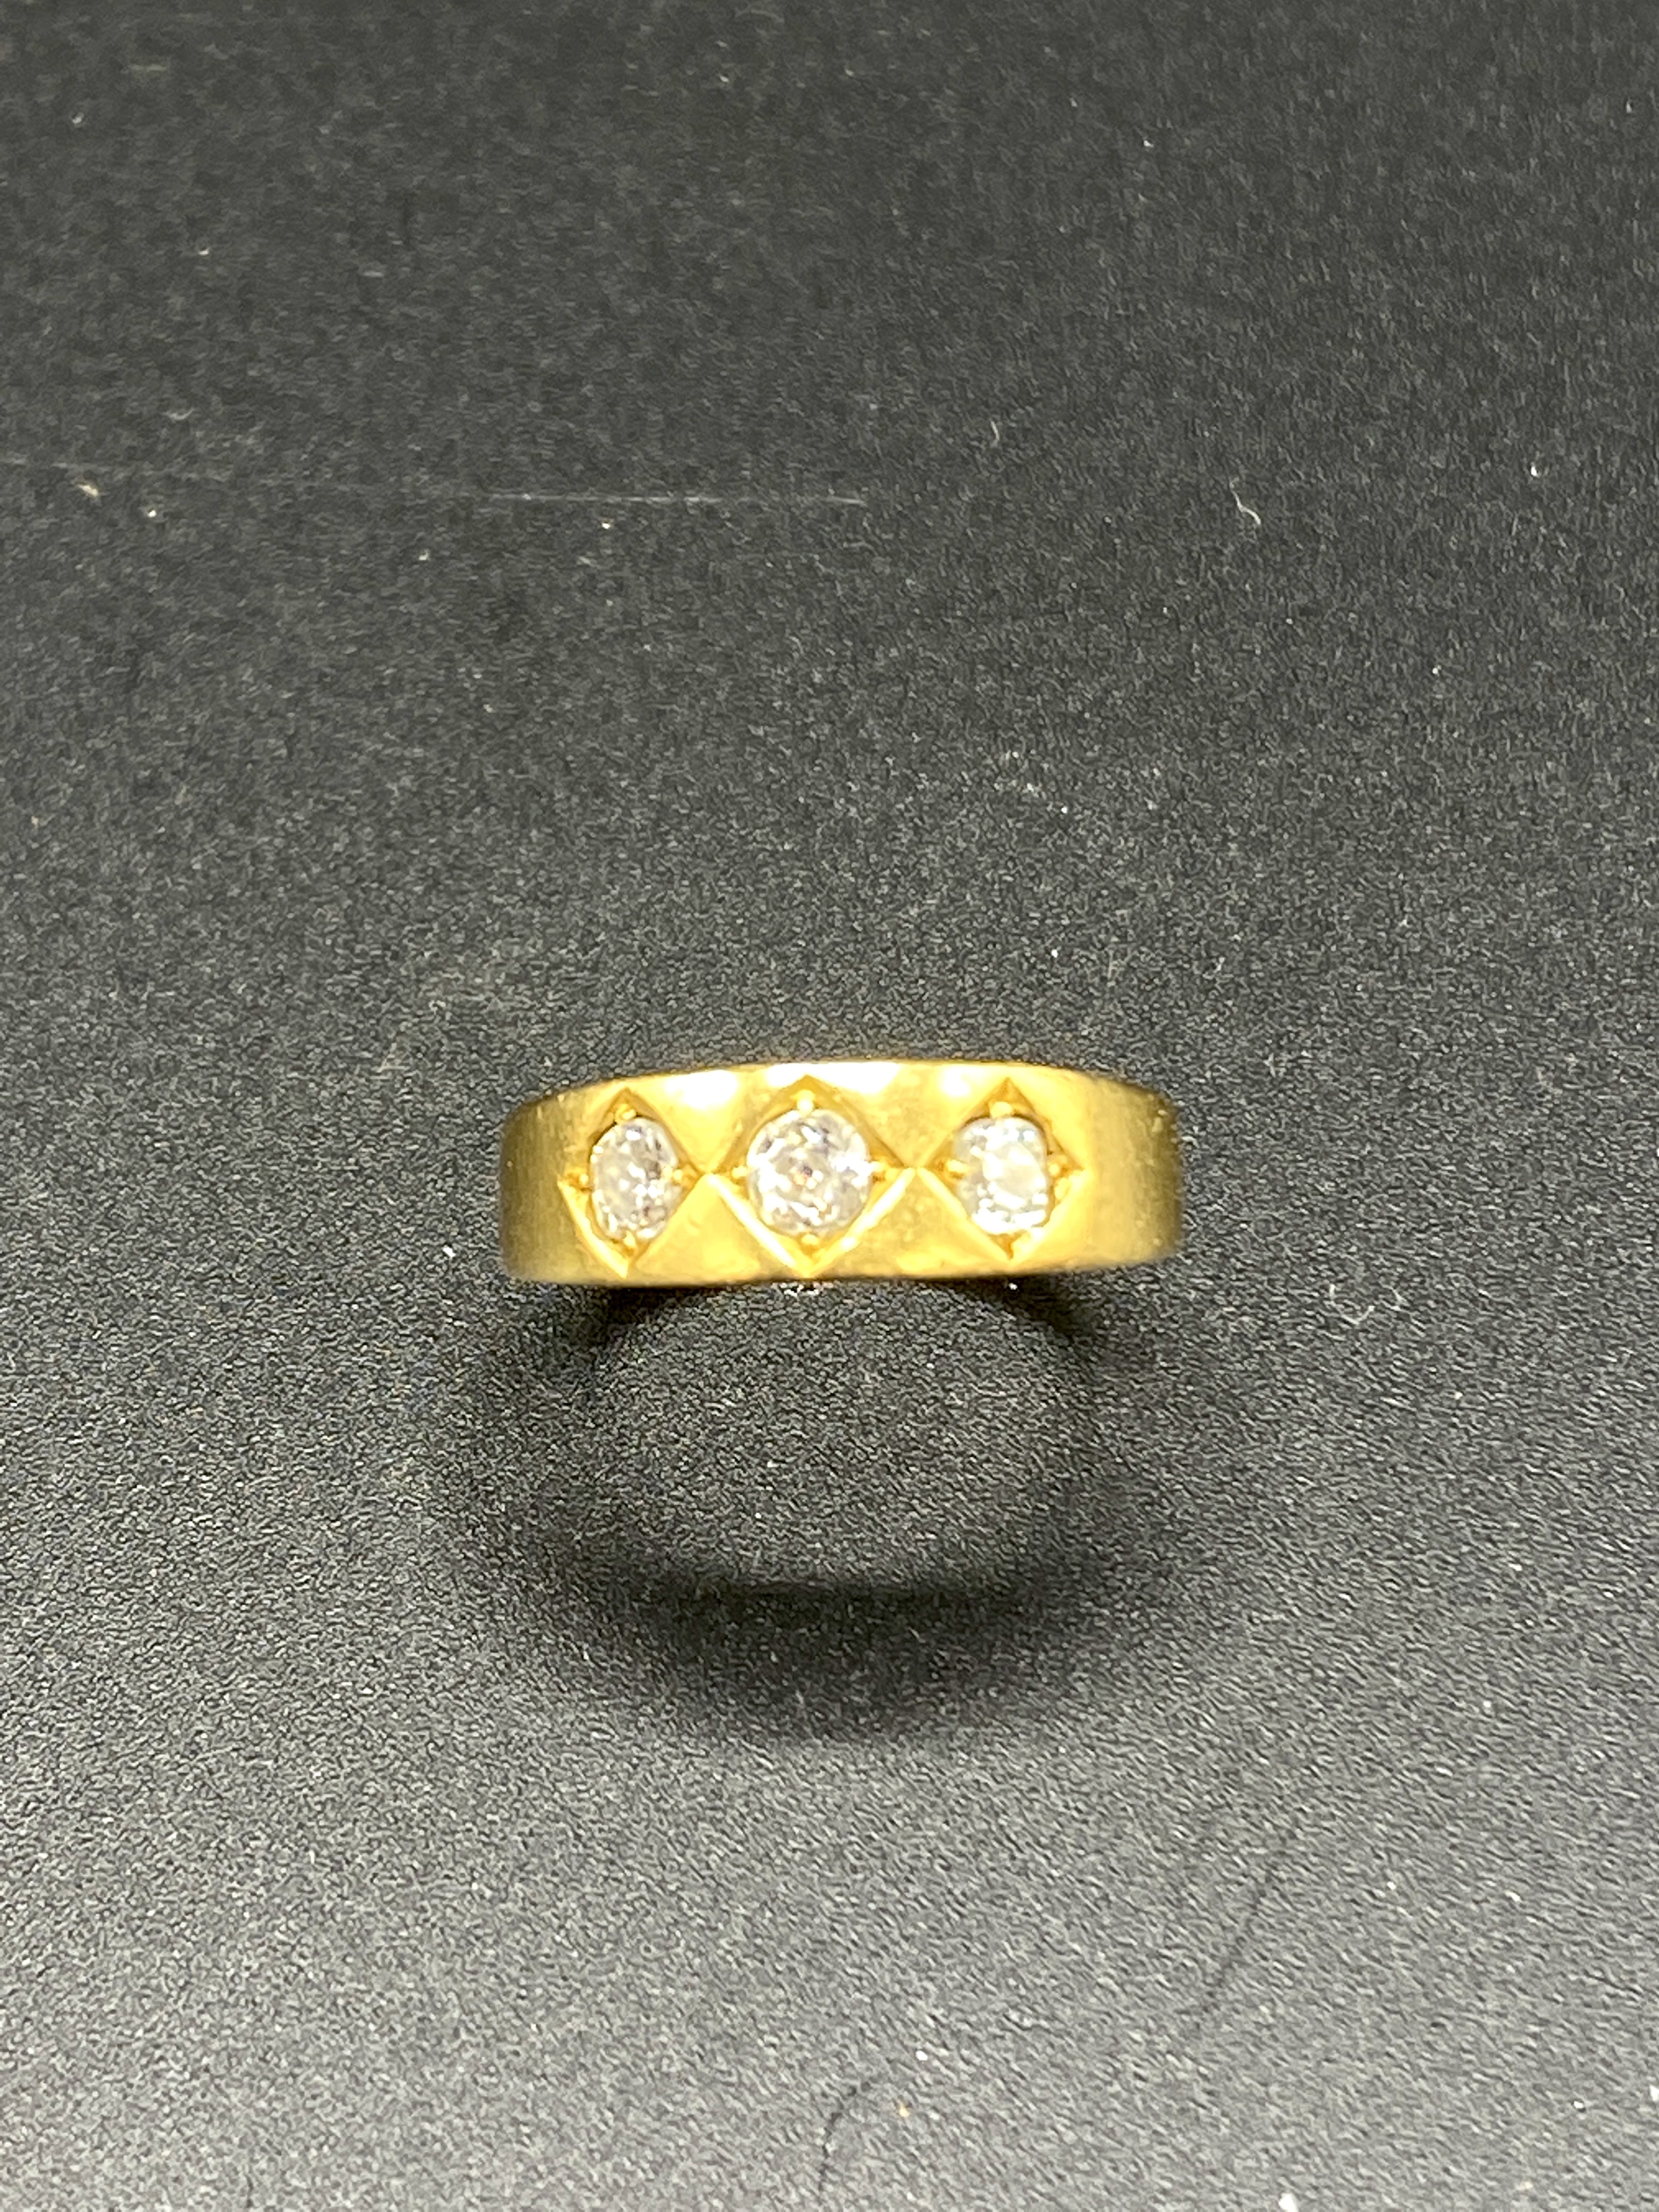 18ct gold three diamond ring - Image 2 of 4